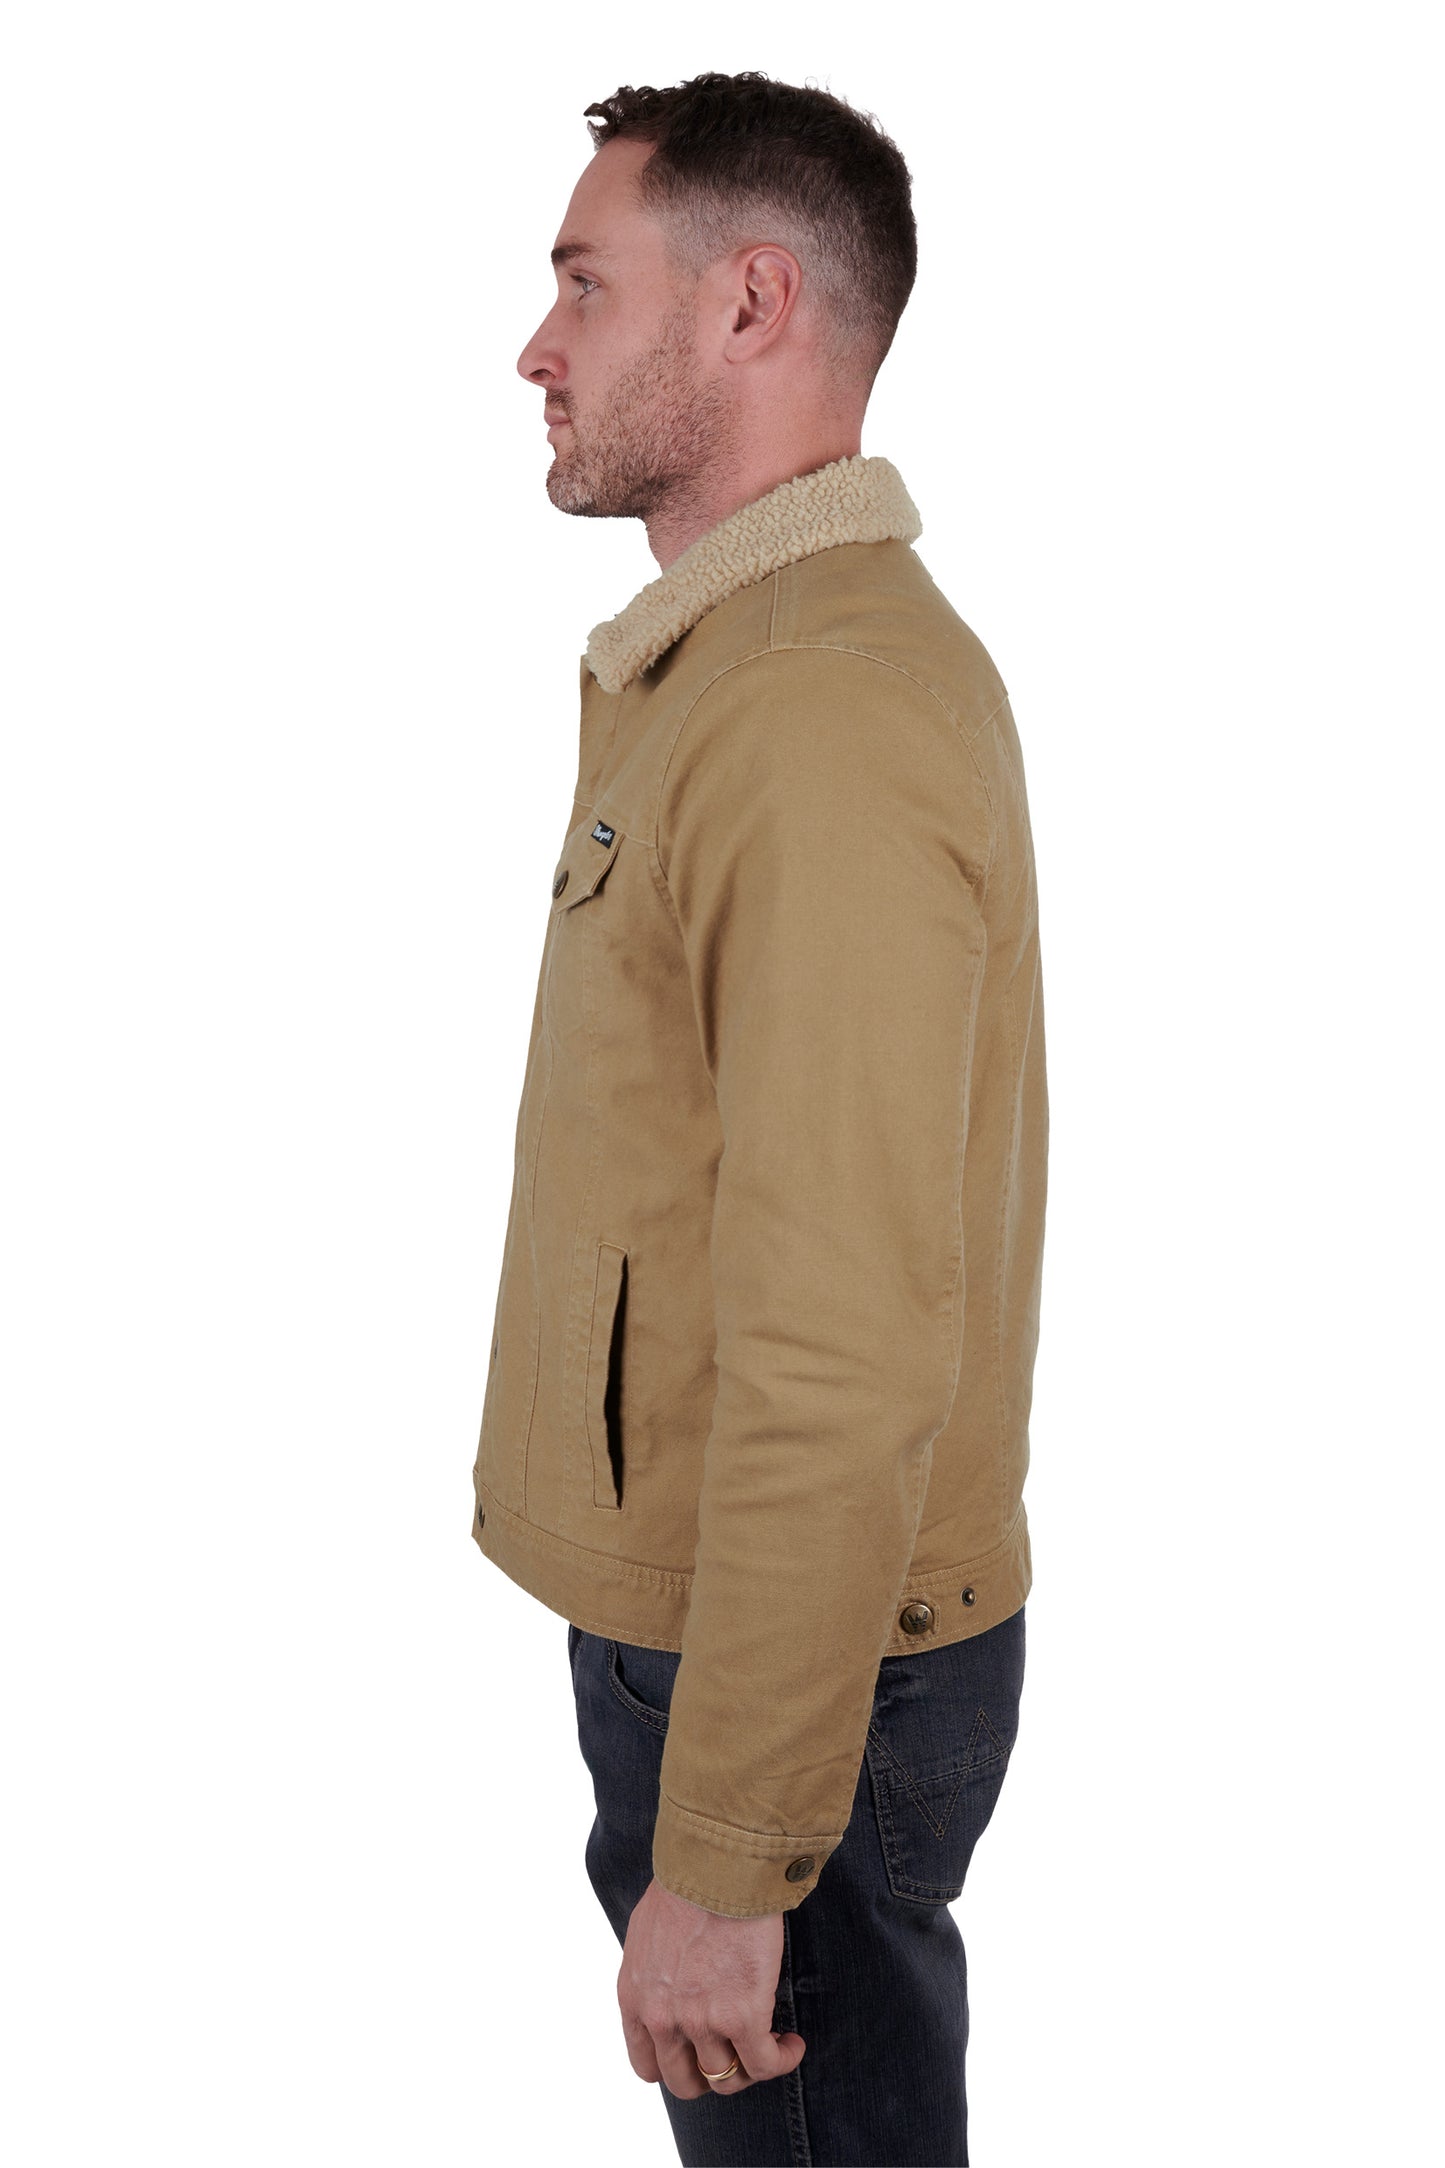 X4W1775035 Wrangler Men's Cameron Jacket